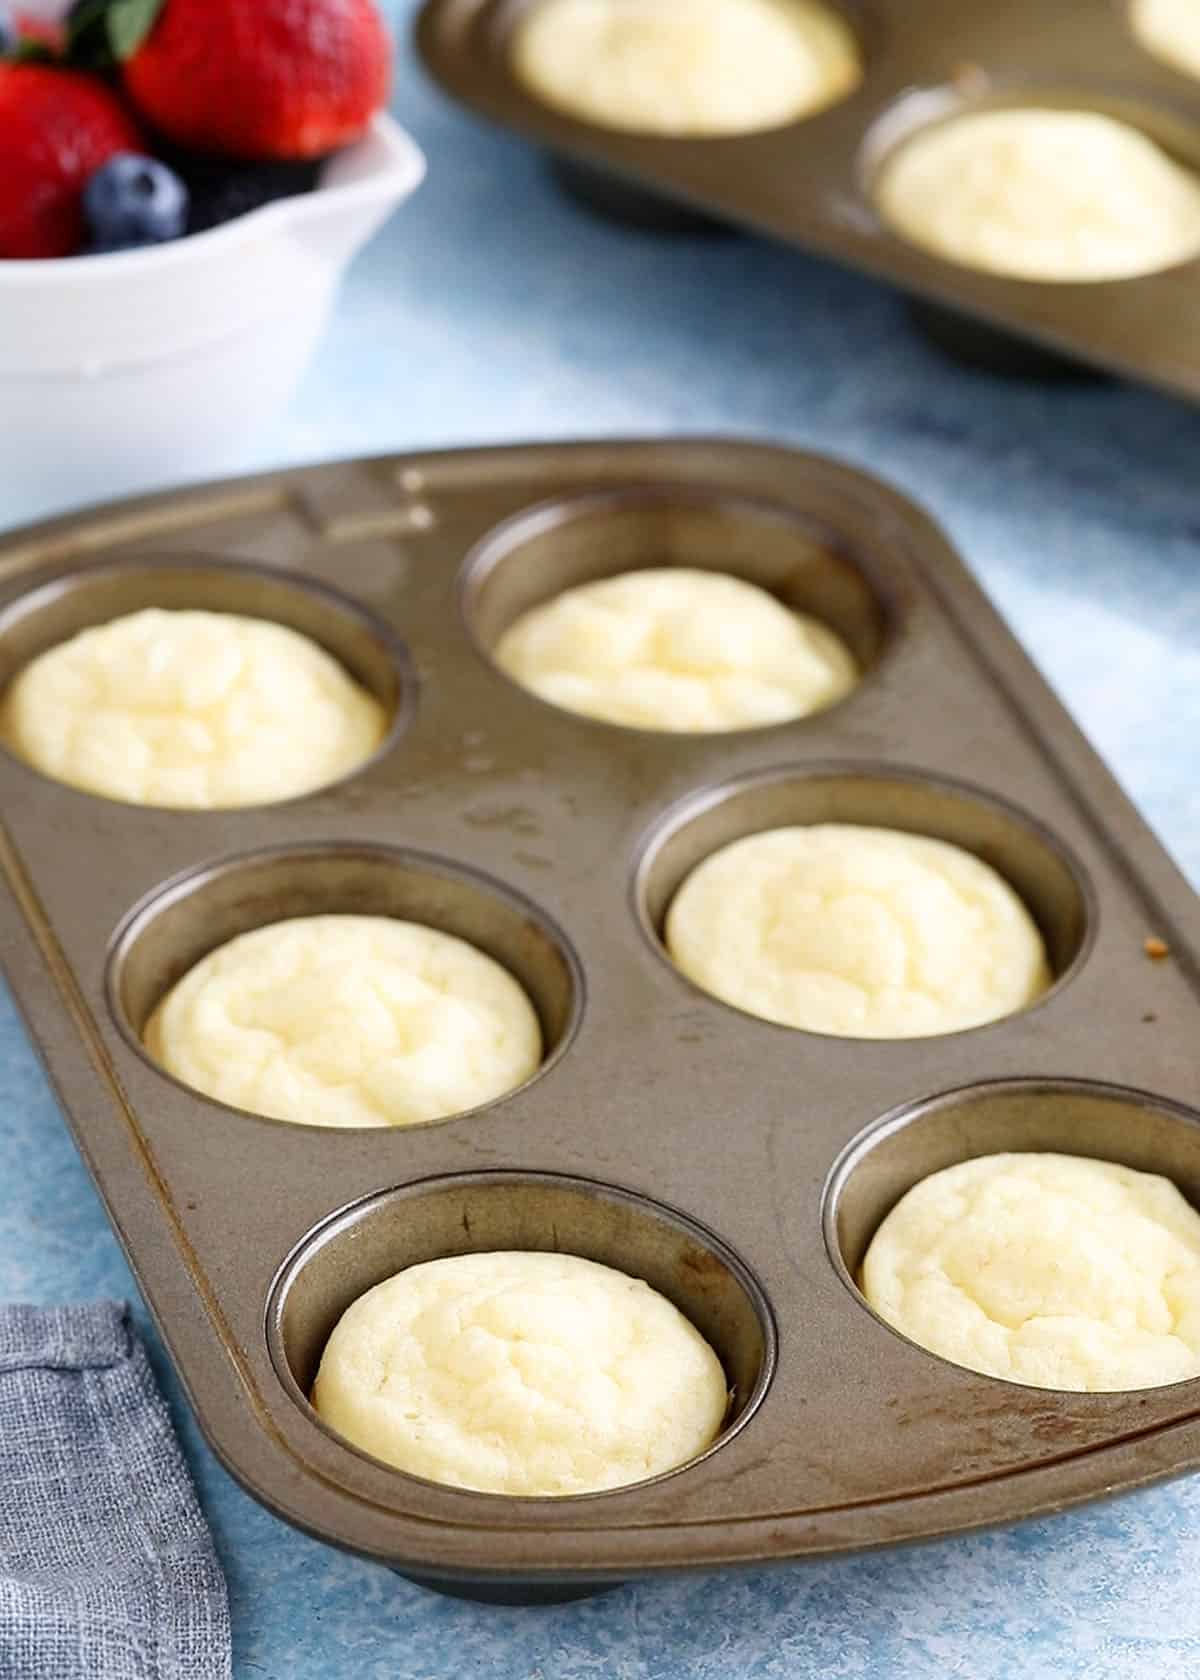 baked pancake muffins in a metal muffin pan.